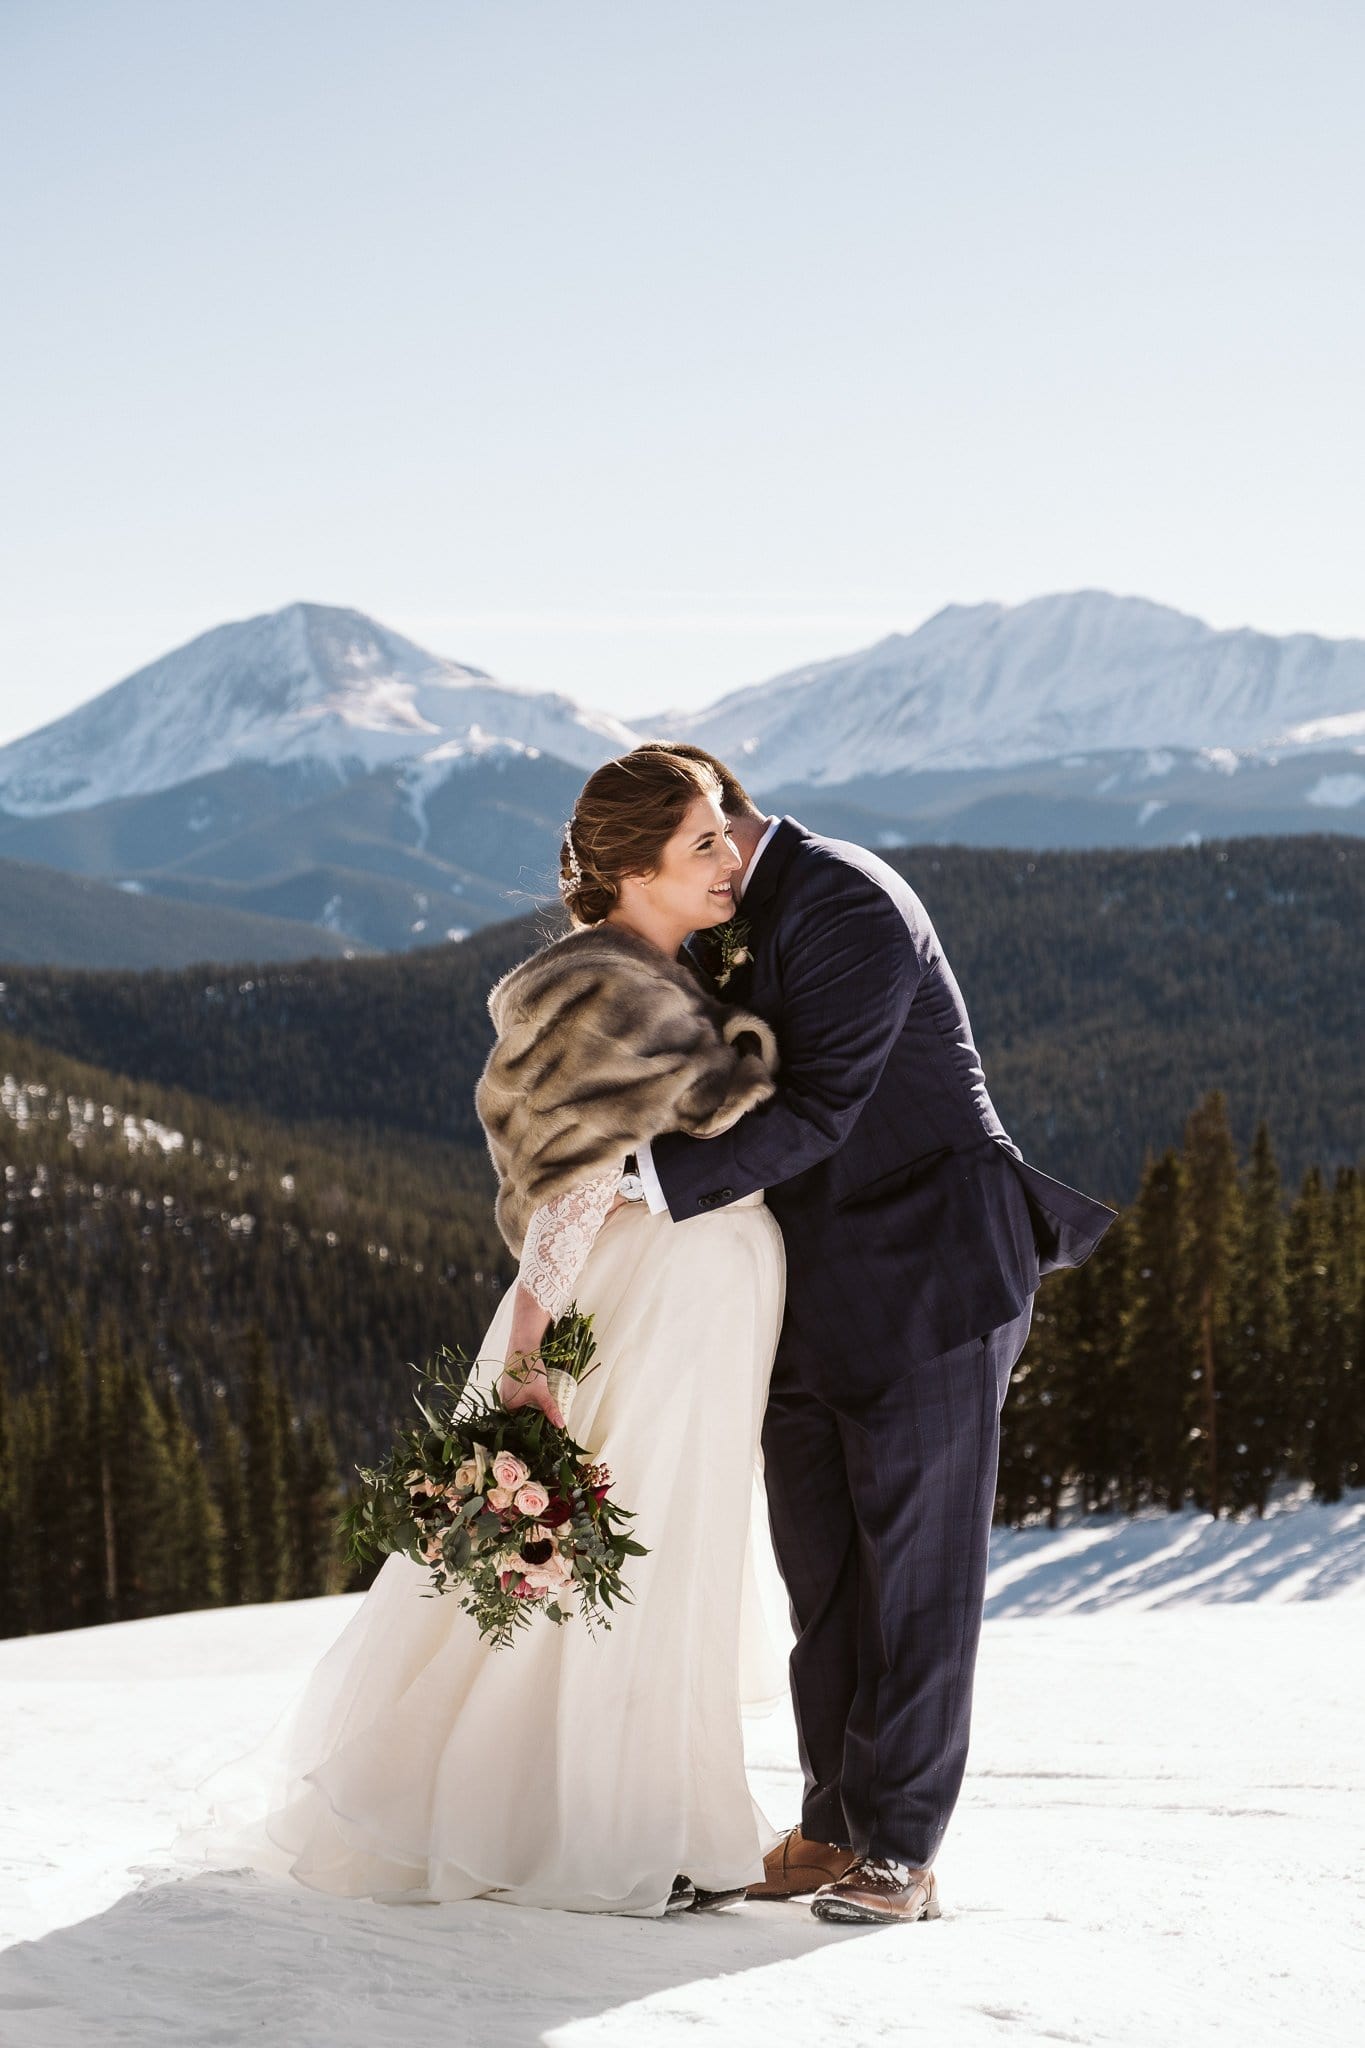 Winter elopement on the slopes of Keystone Ski Resort in Colorado.